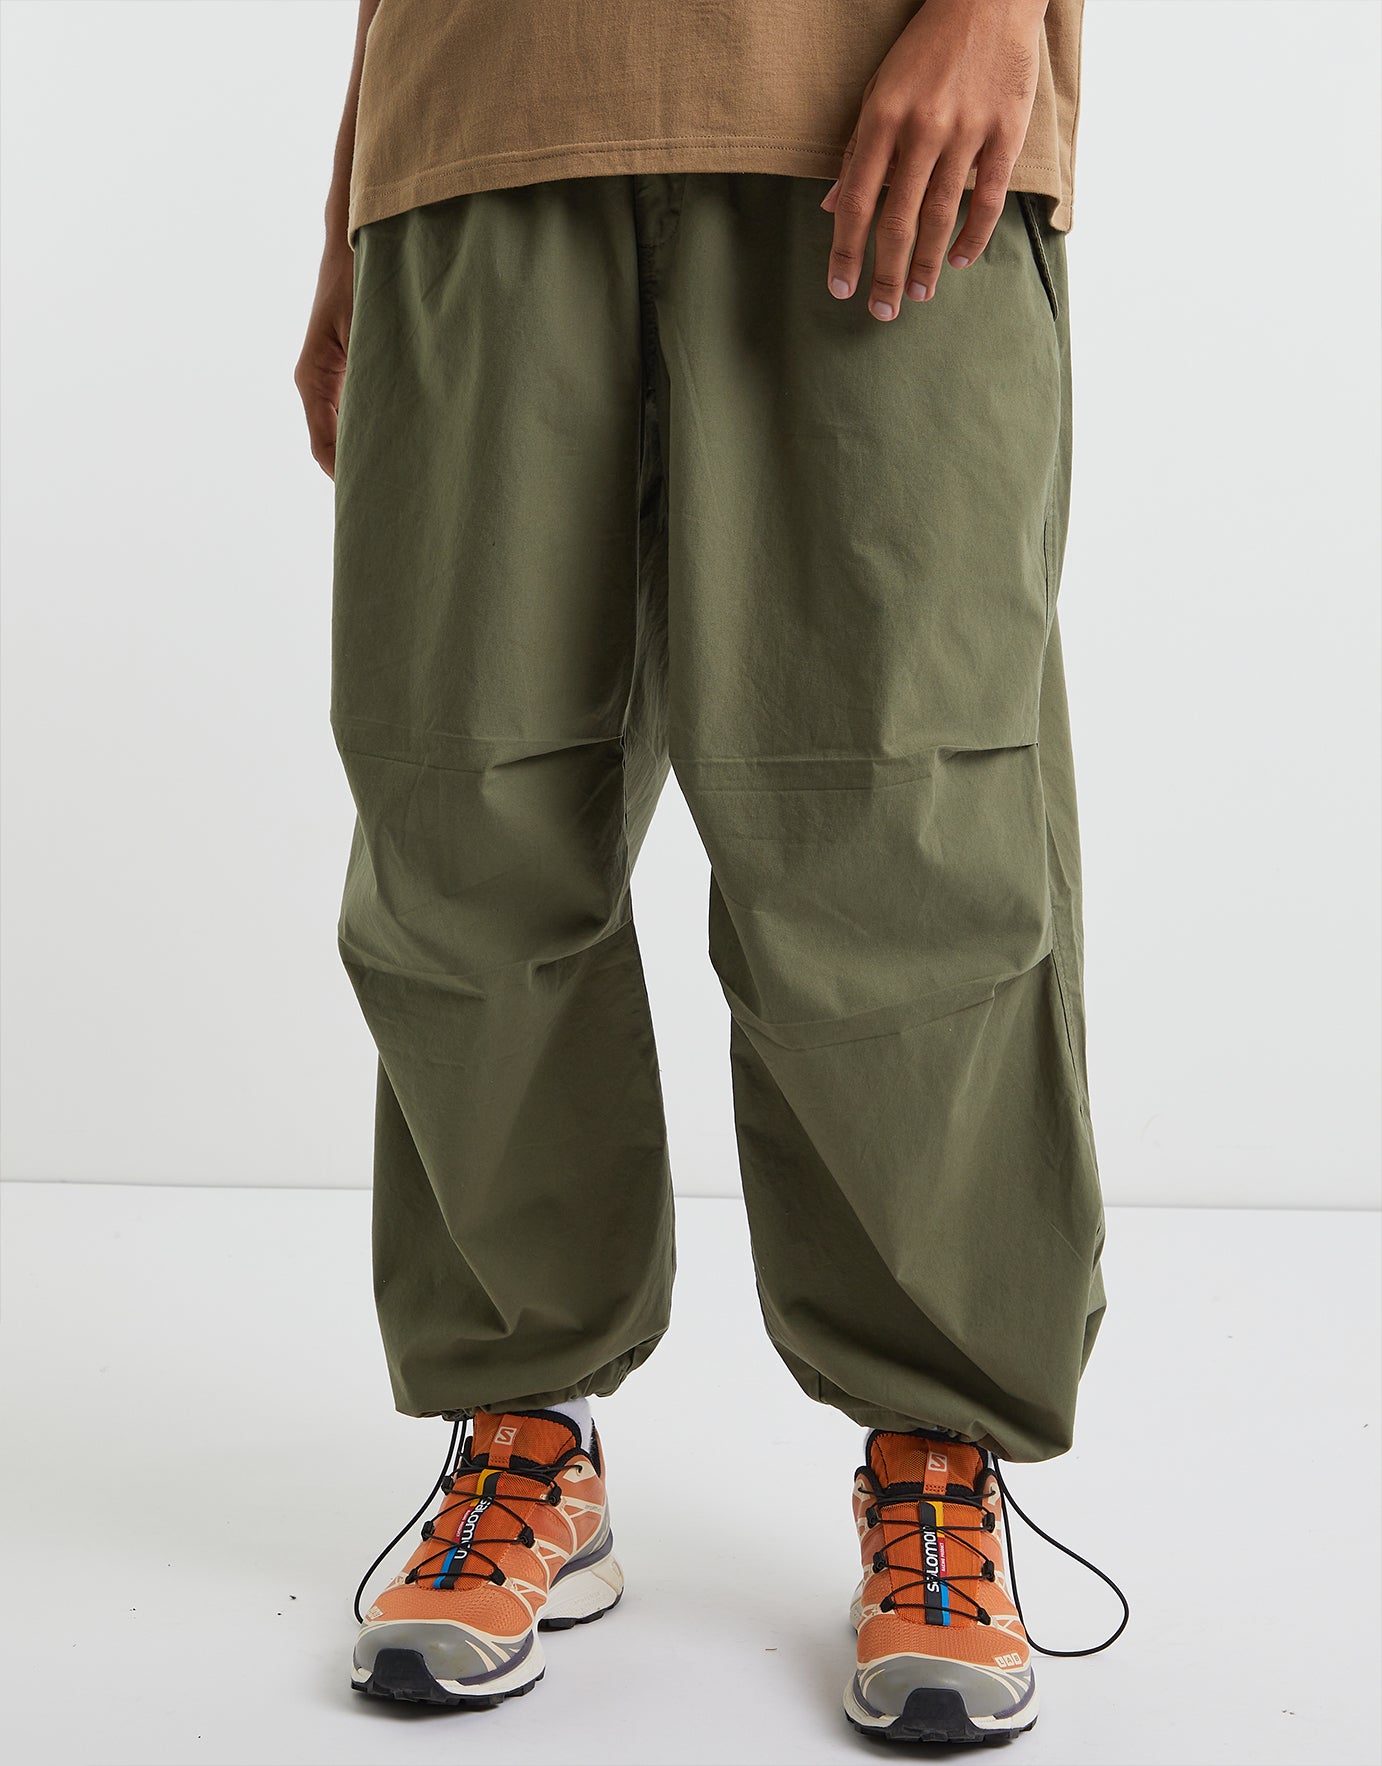 Multi-Pocket Straight Leg Pants Parachute Pant Trousers Cargo Pants Casual  Y | eBay